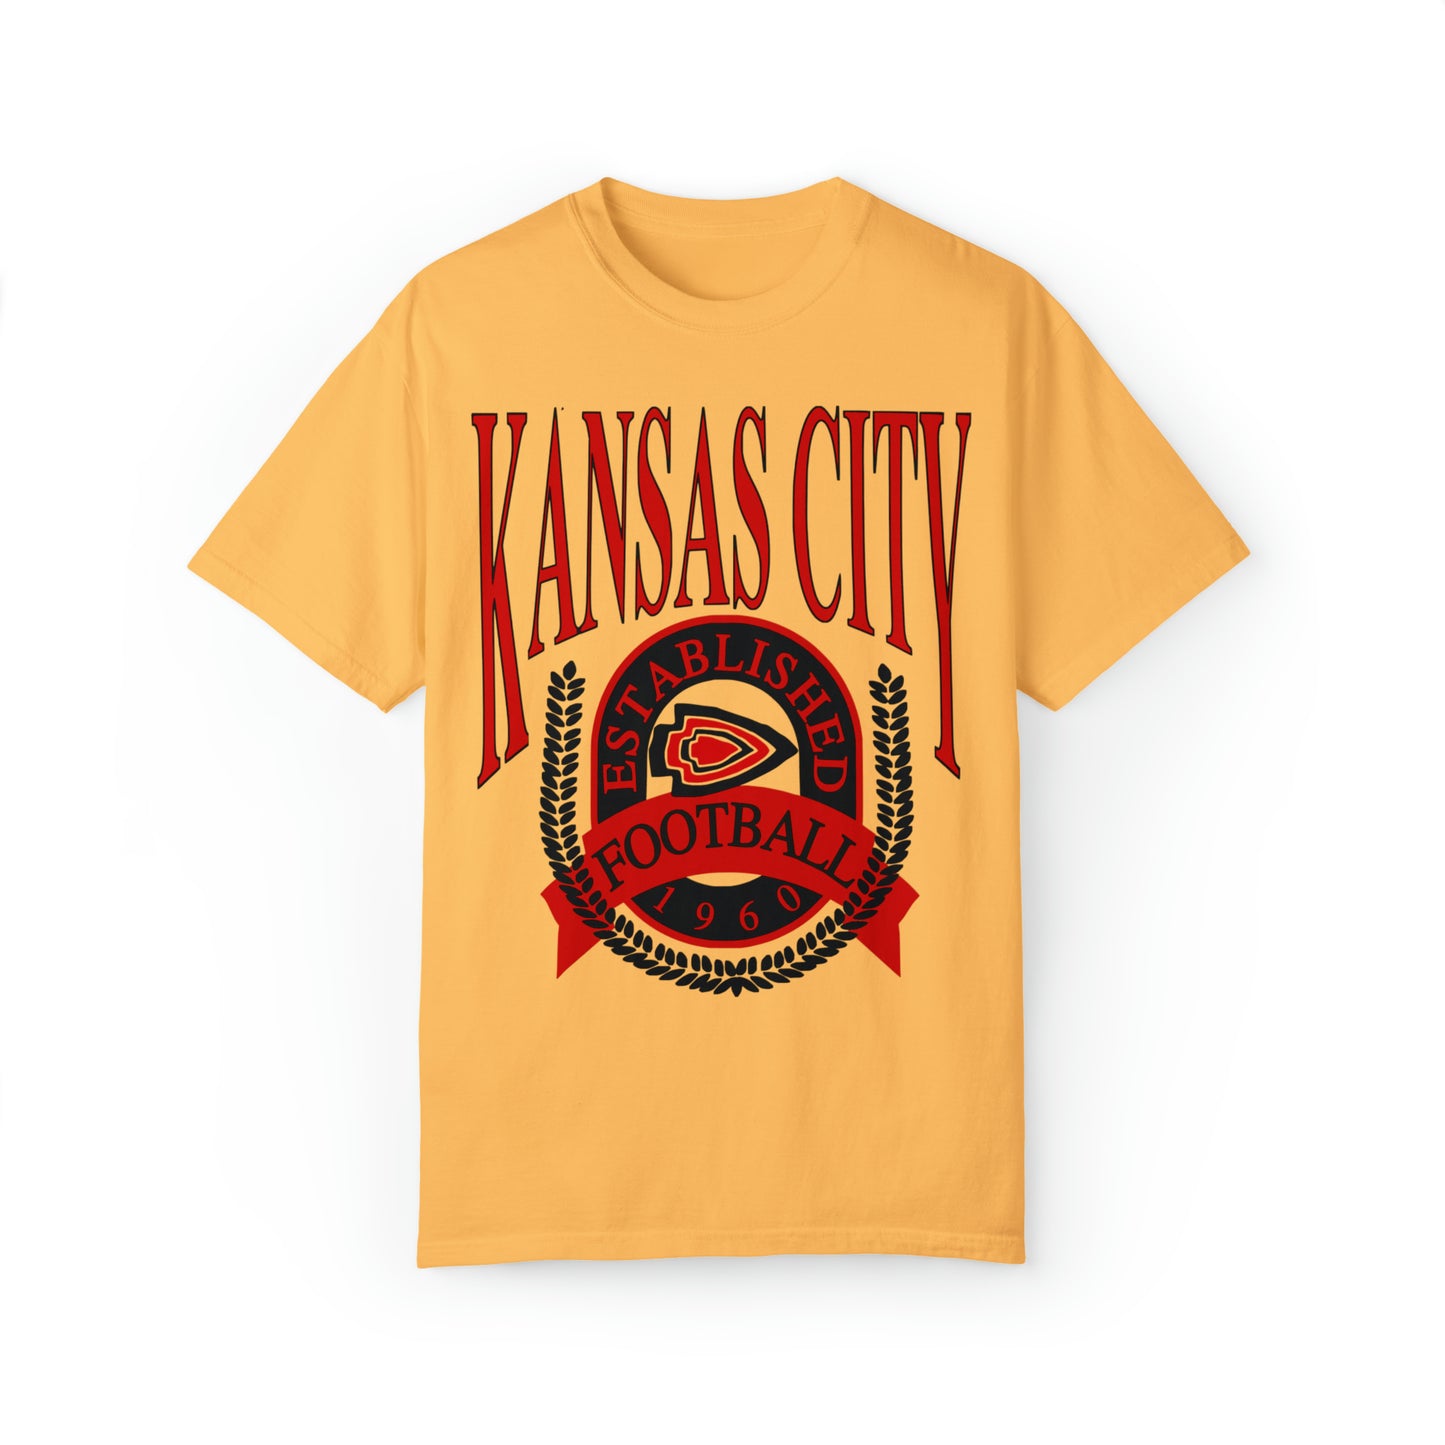  Kansas City Chiefs T-Shirt - Vintage Travis Kelce Tee - Arrowhead Stadium -  NFL Football Apparel, Retro Tee - Design 1